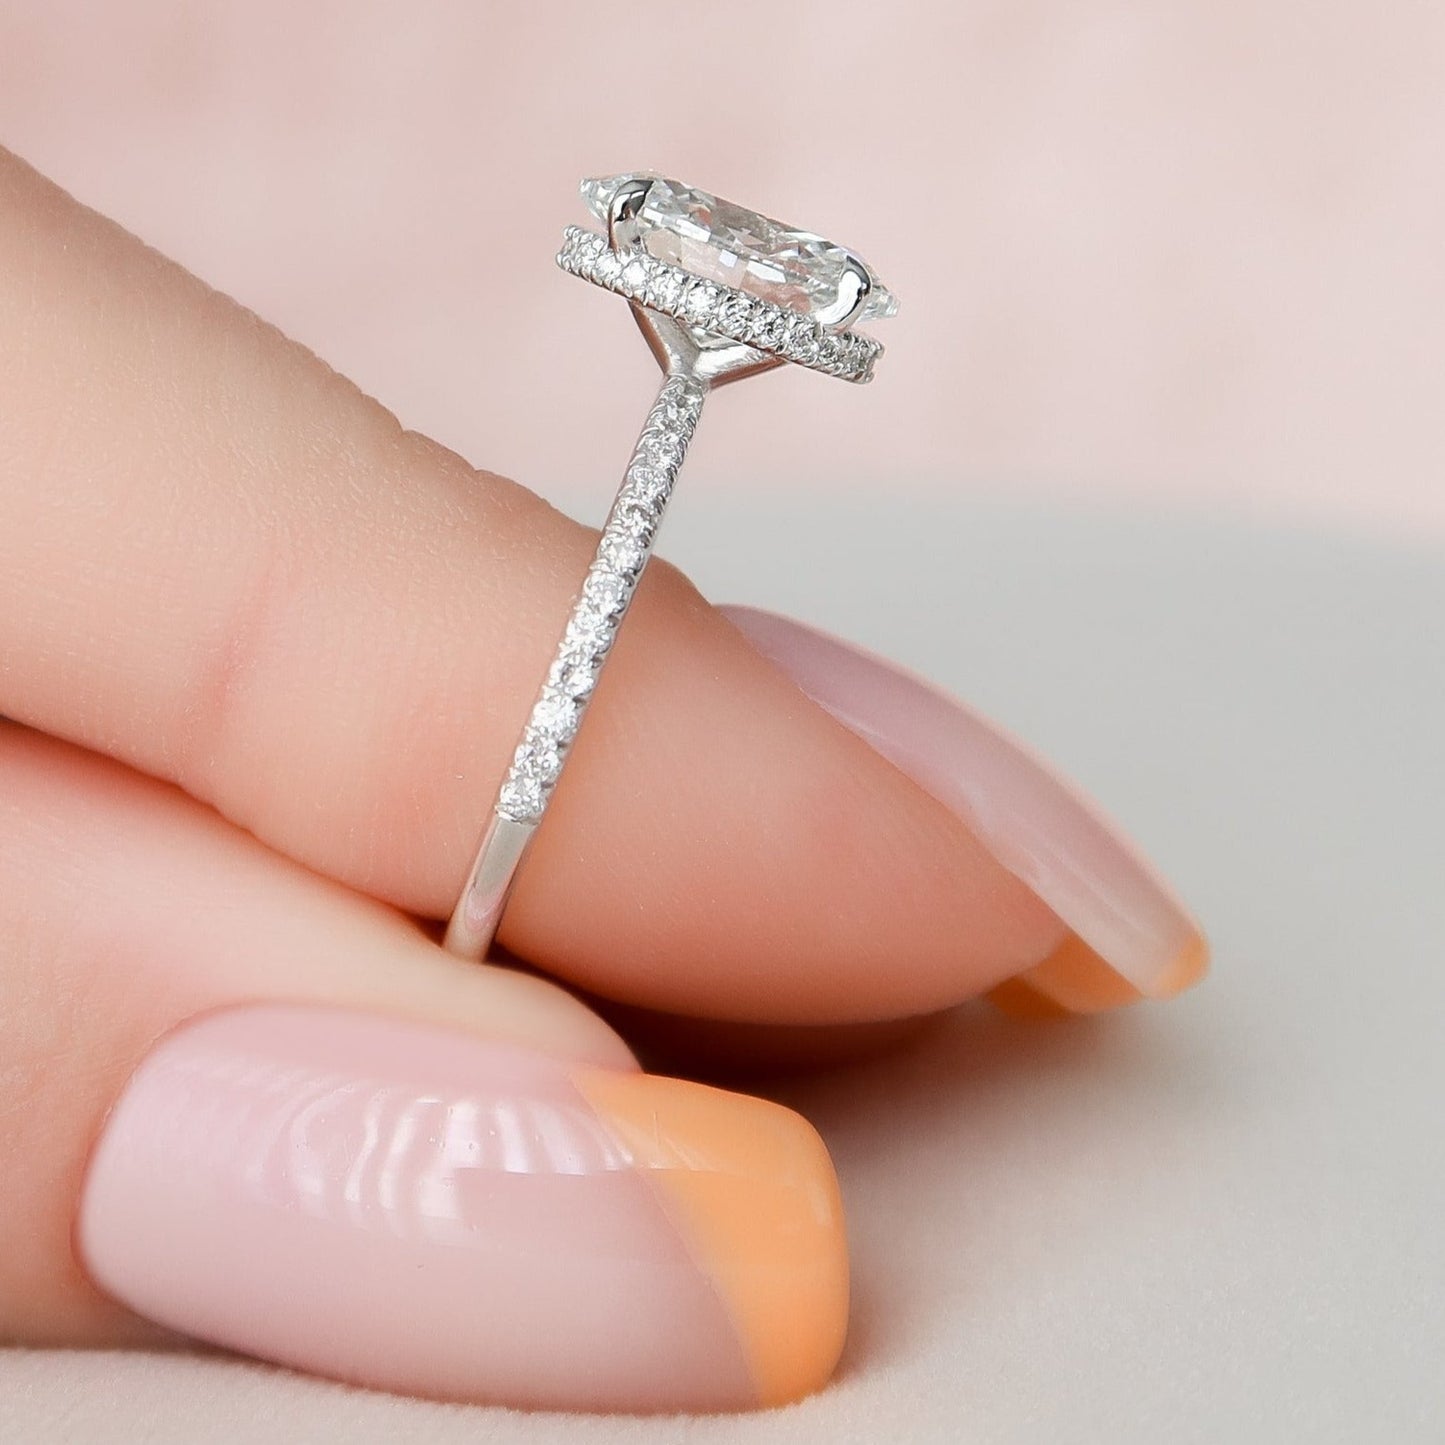 Oval Cut Hidden Halo Set Diamond Wedding Ring